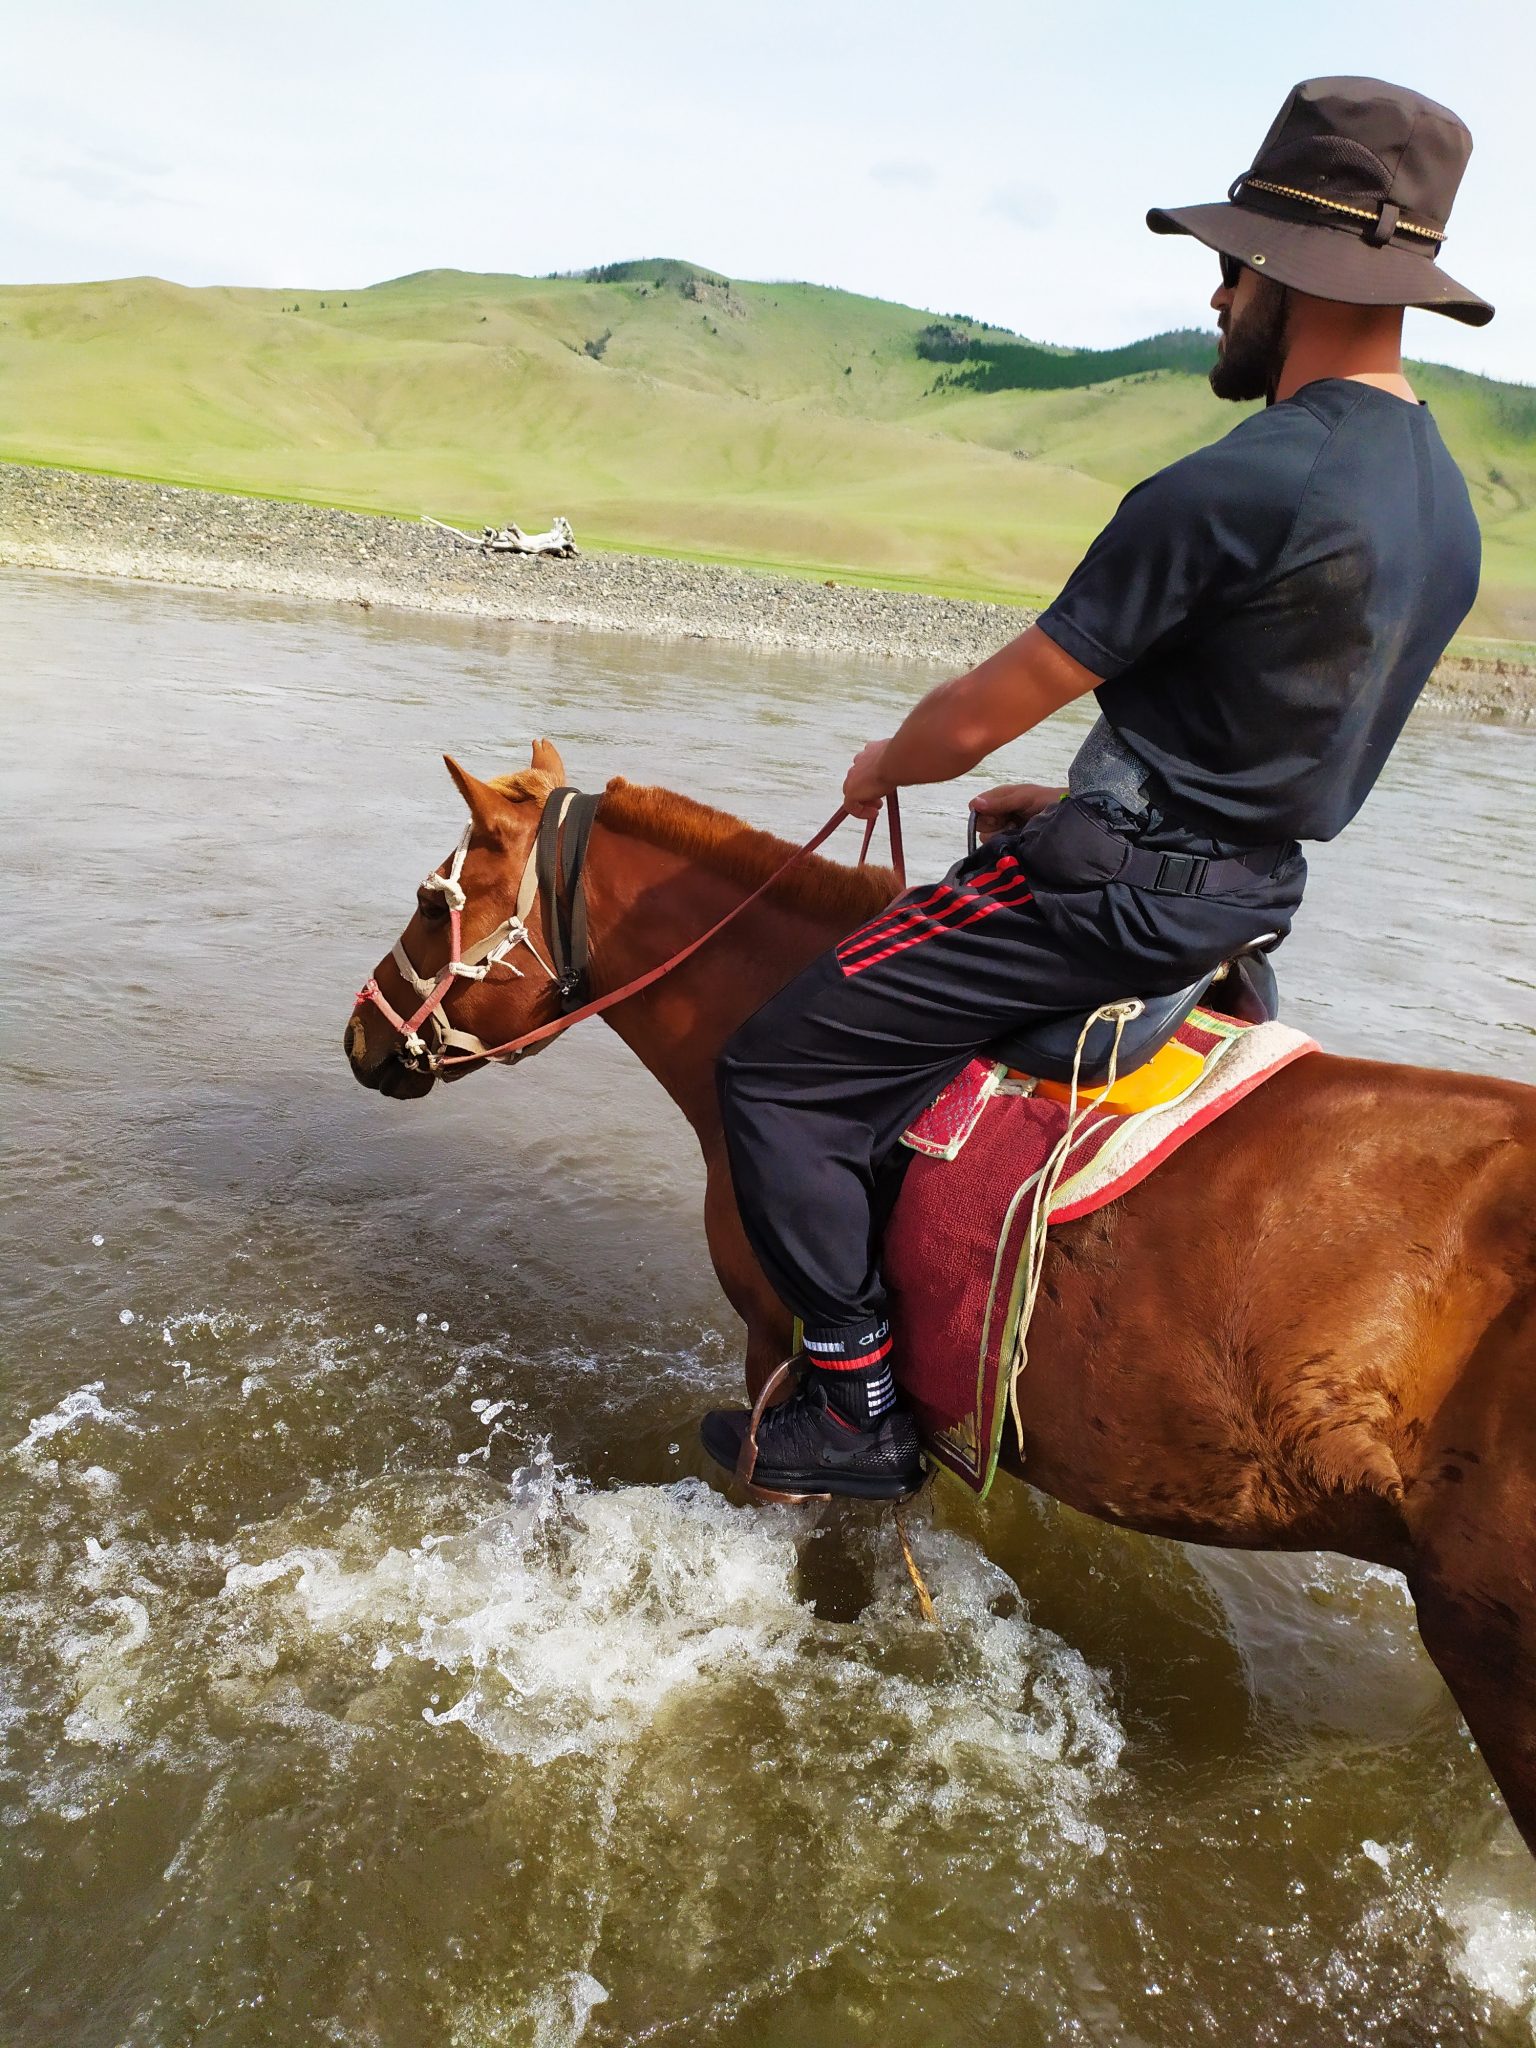 L'aventure nomade en Mongolie